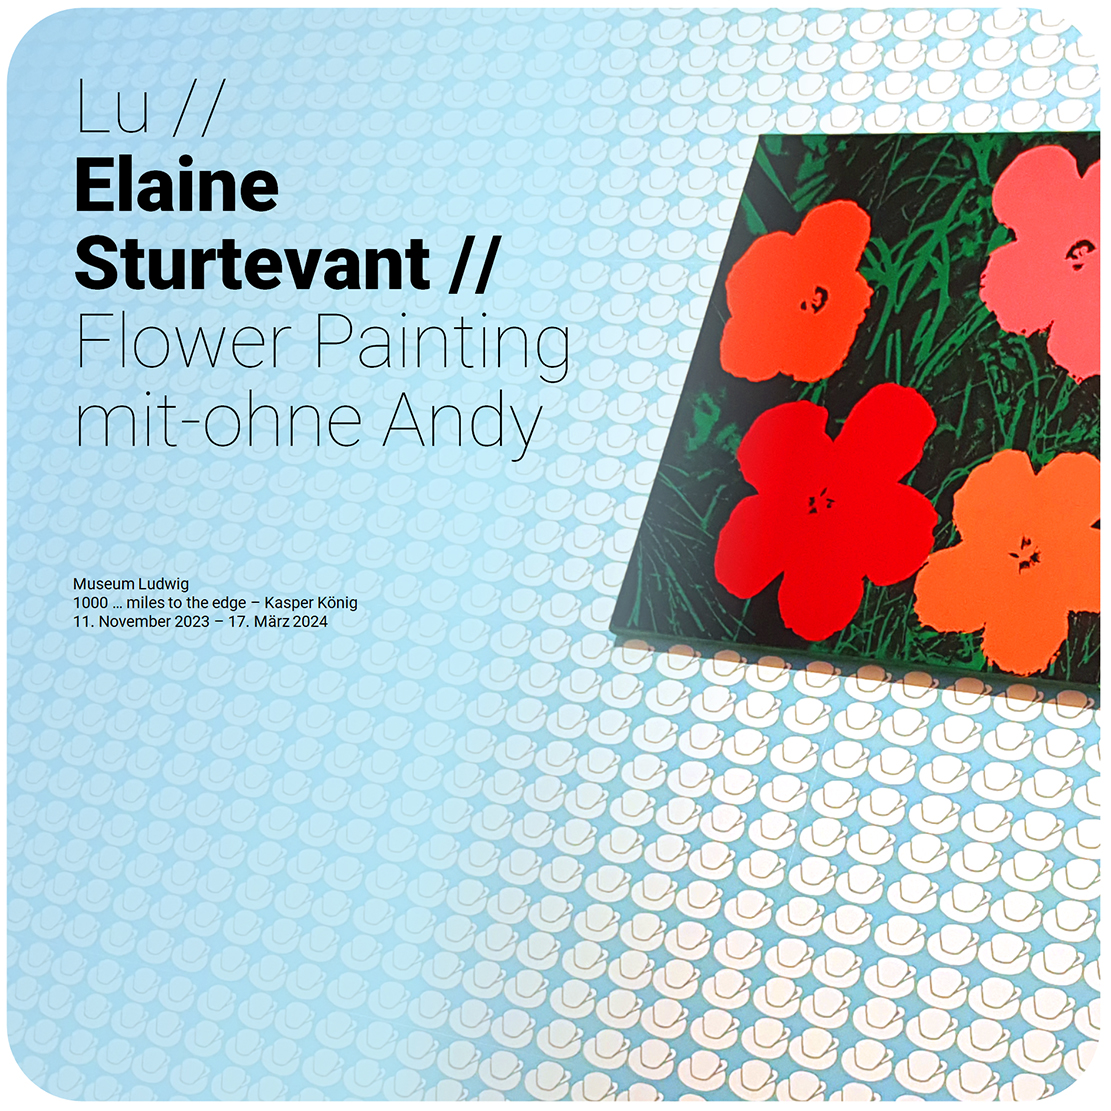 LU // Elaine Sturtevant // Flower Painting mit-ohne Andy